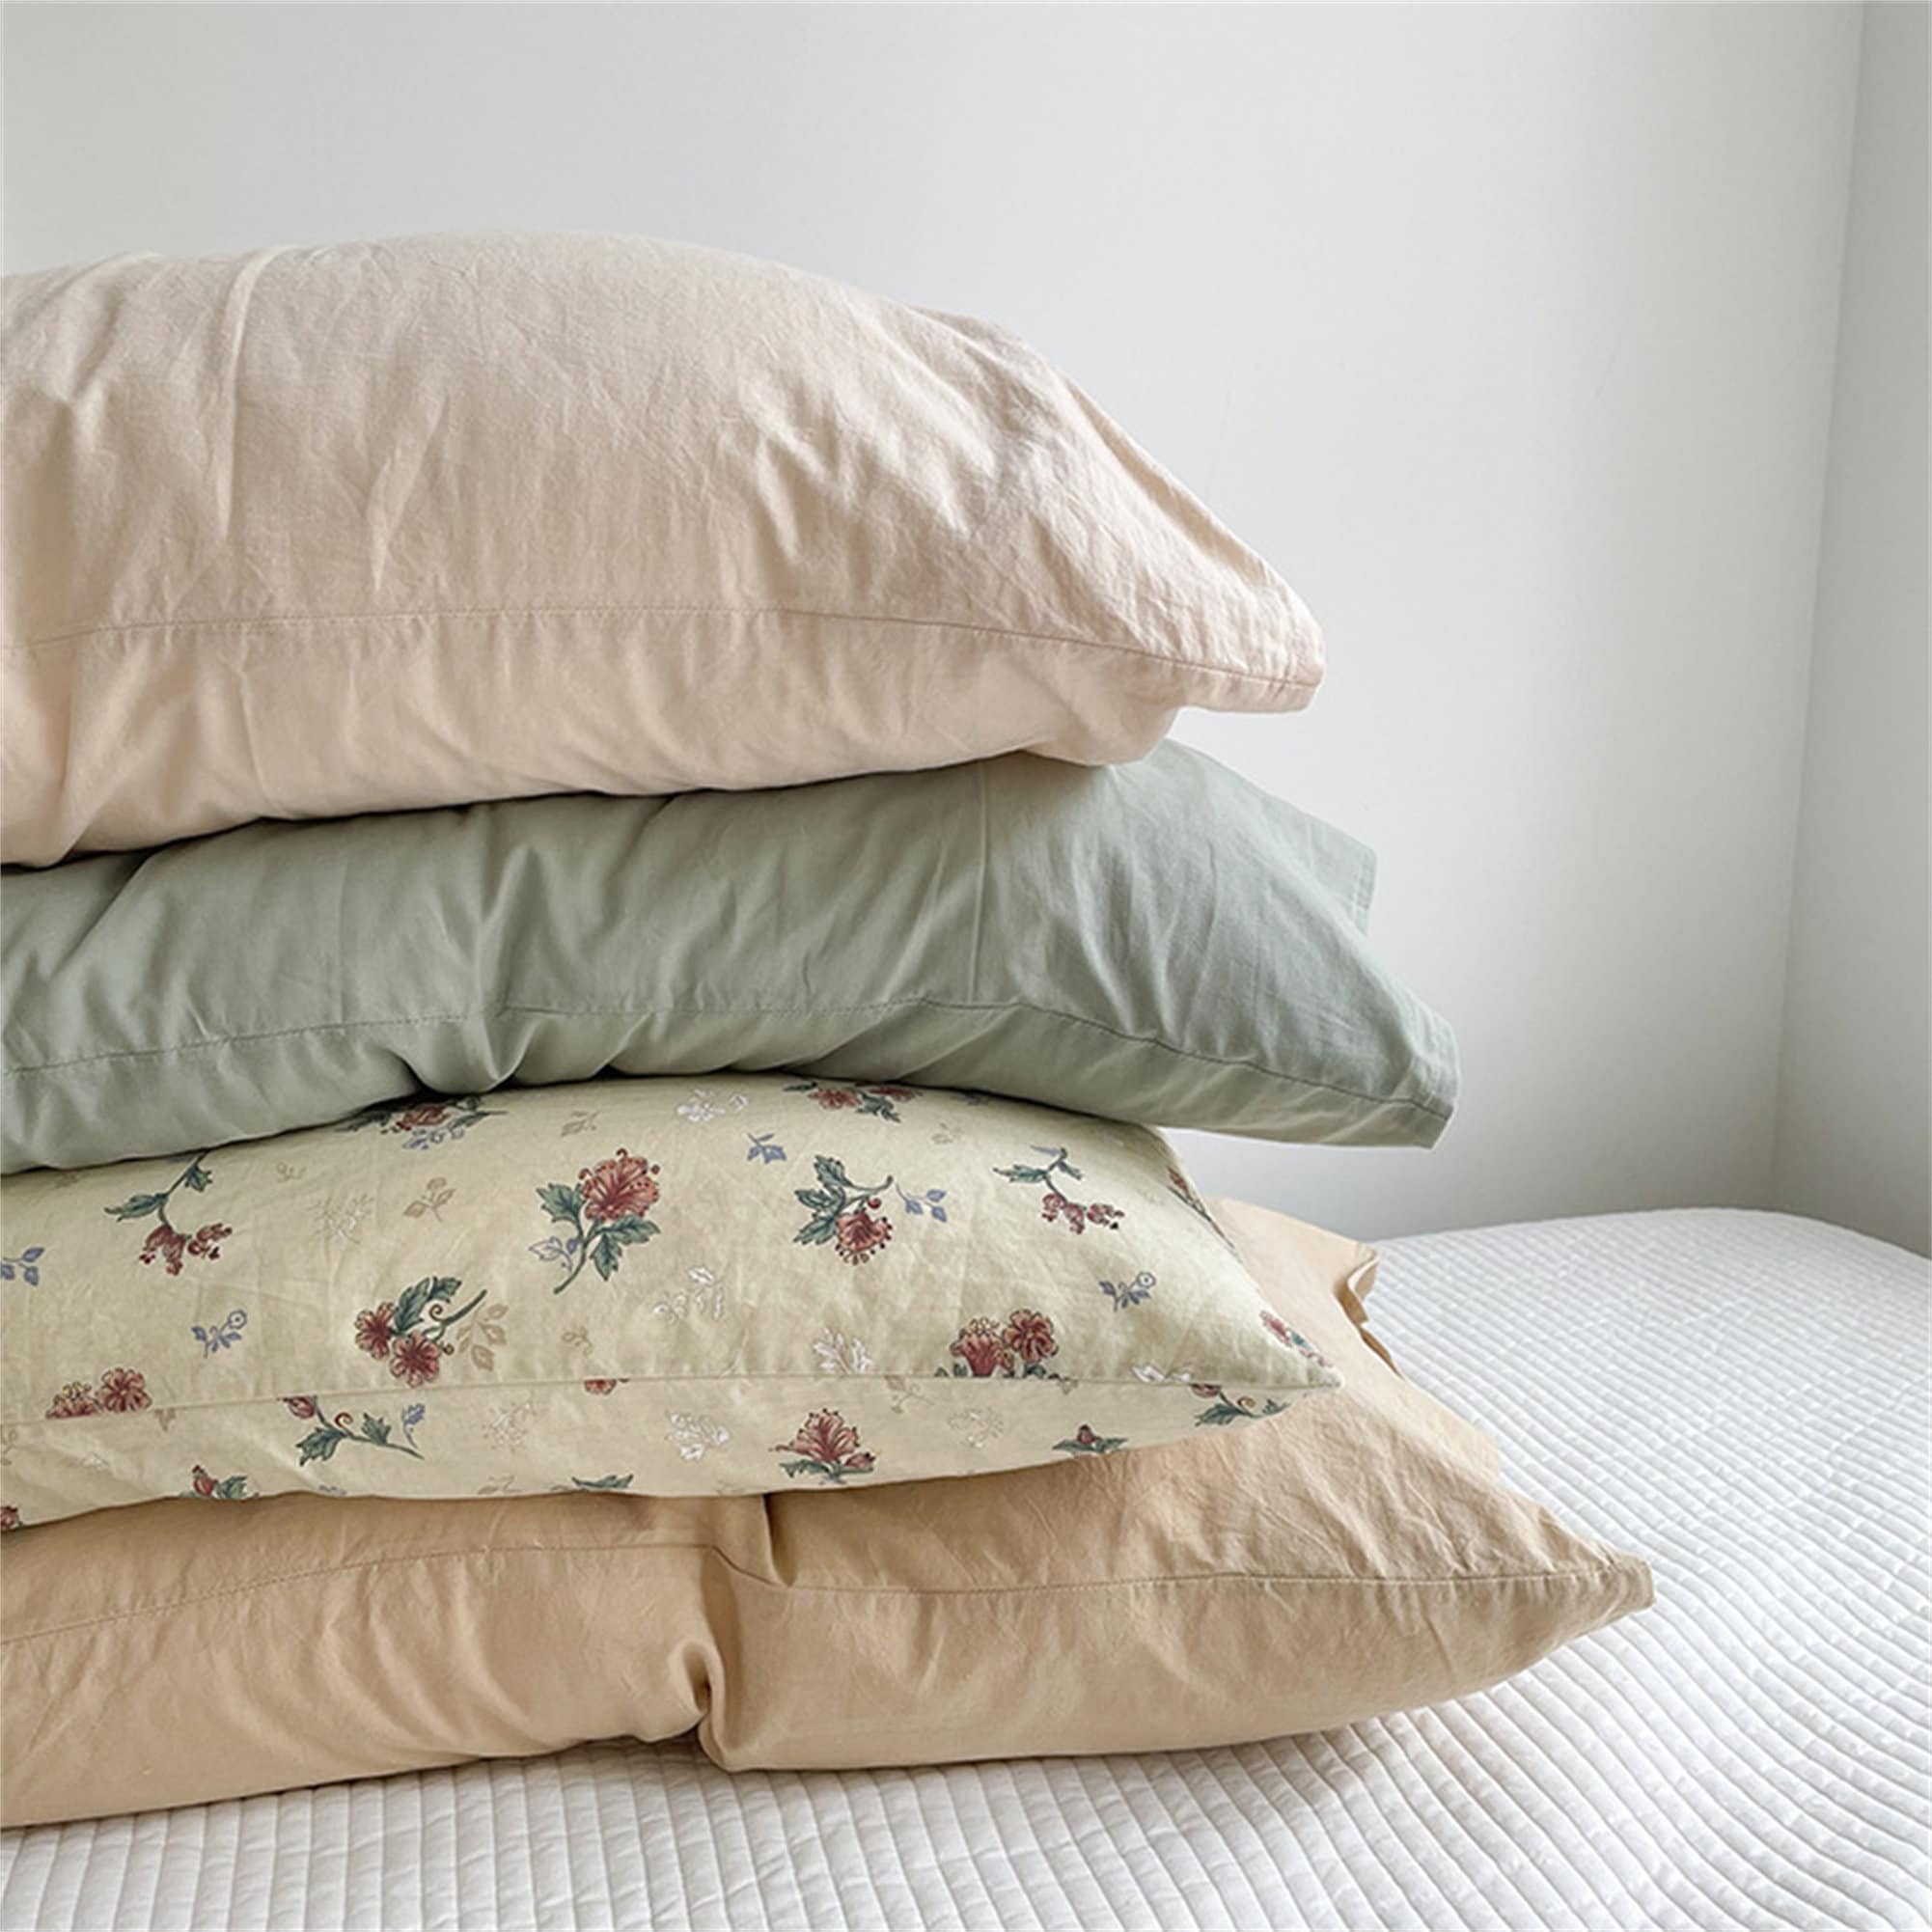 Details about   1 Pair of Cotton Pillow Cases Floral Bedding Pillow Covers Pillowcases 48*74cm 